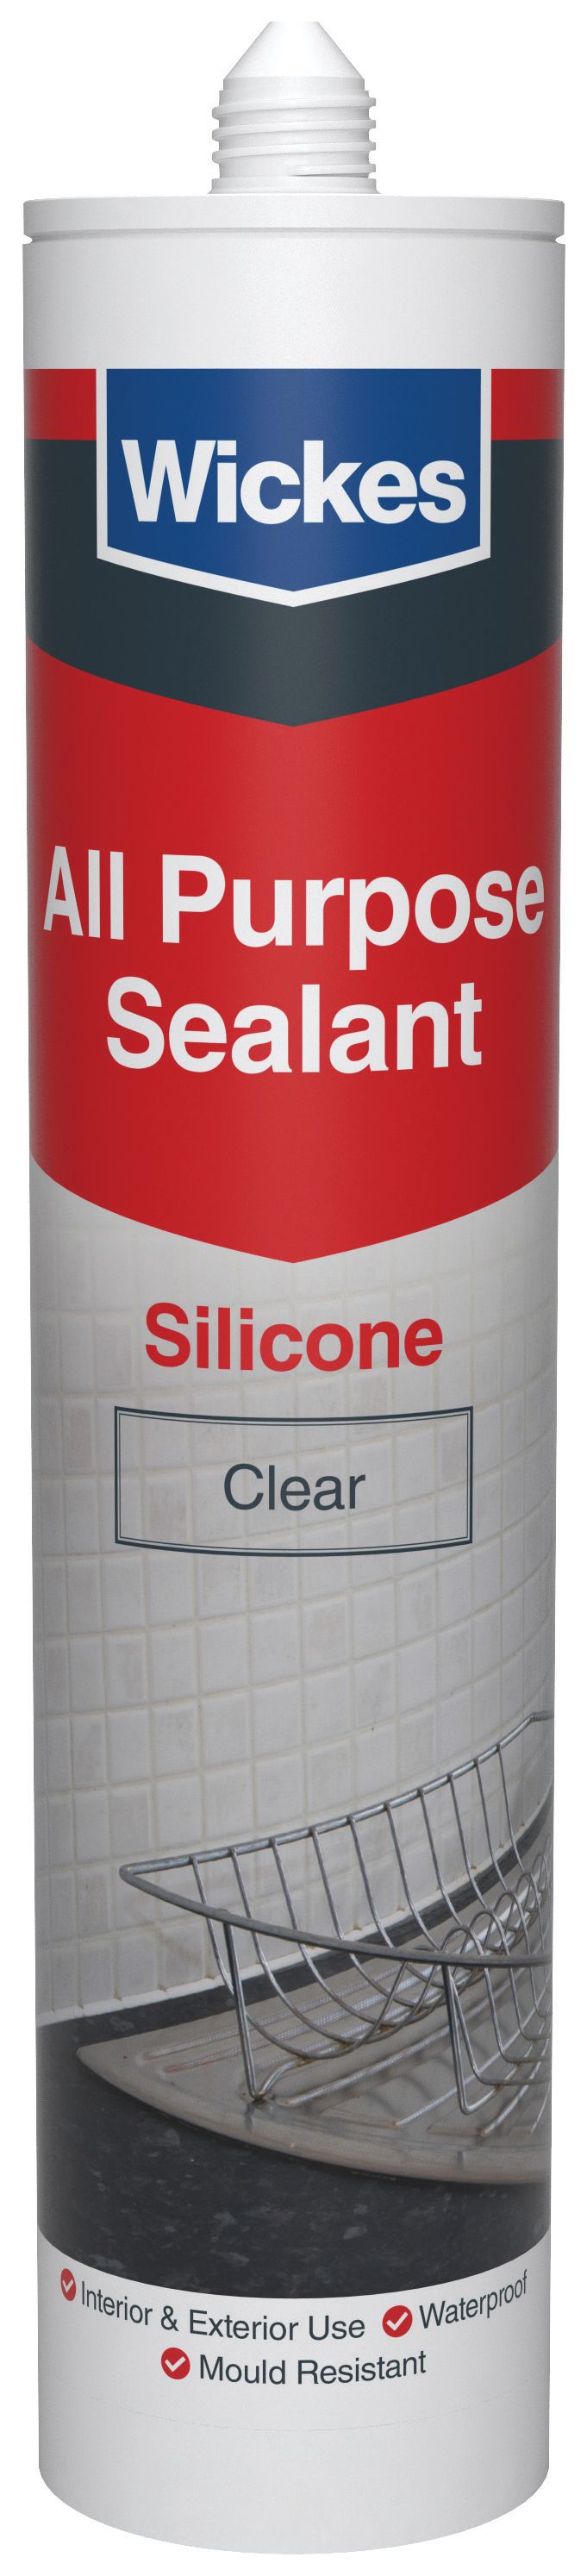 Image of Wickes All Purpose Silicone Sealant Clear 300ml